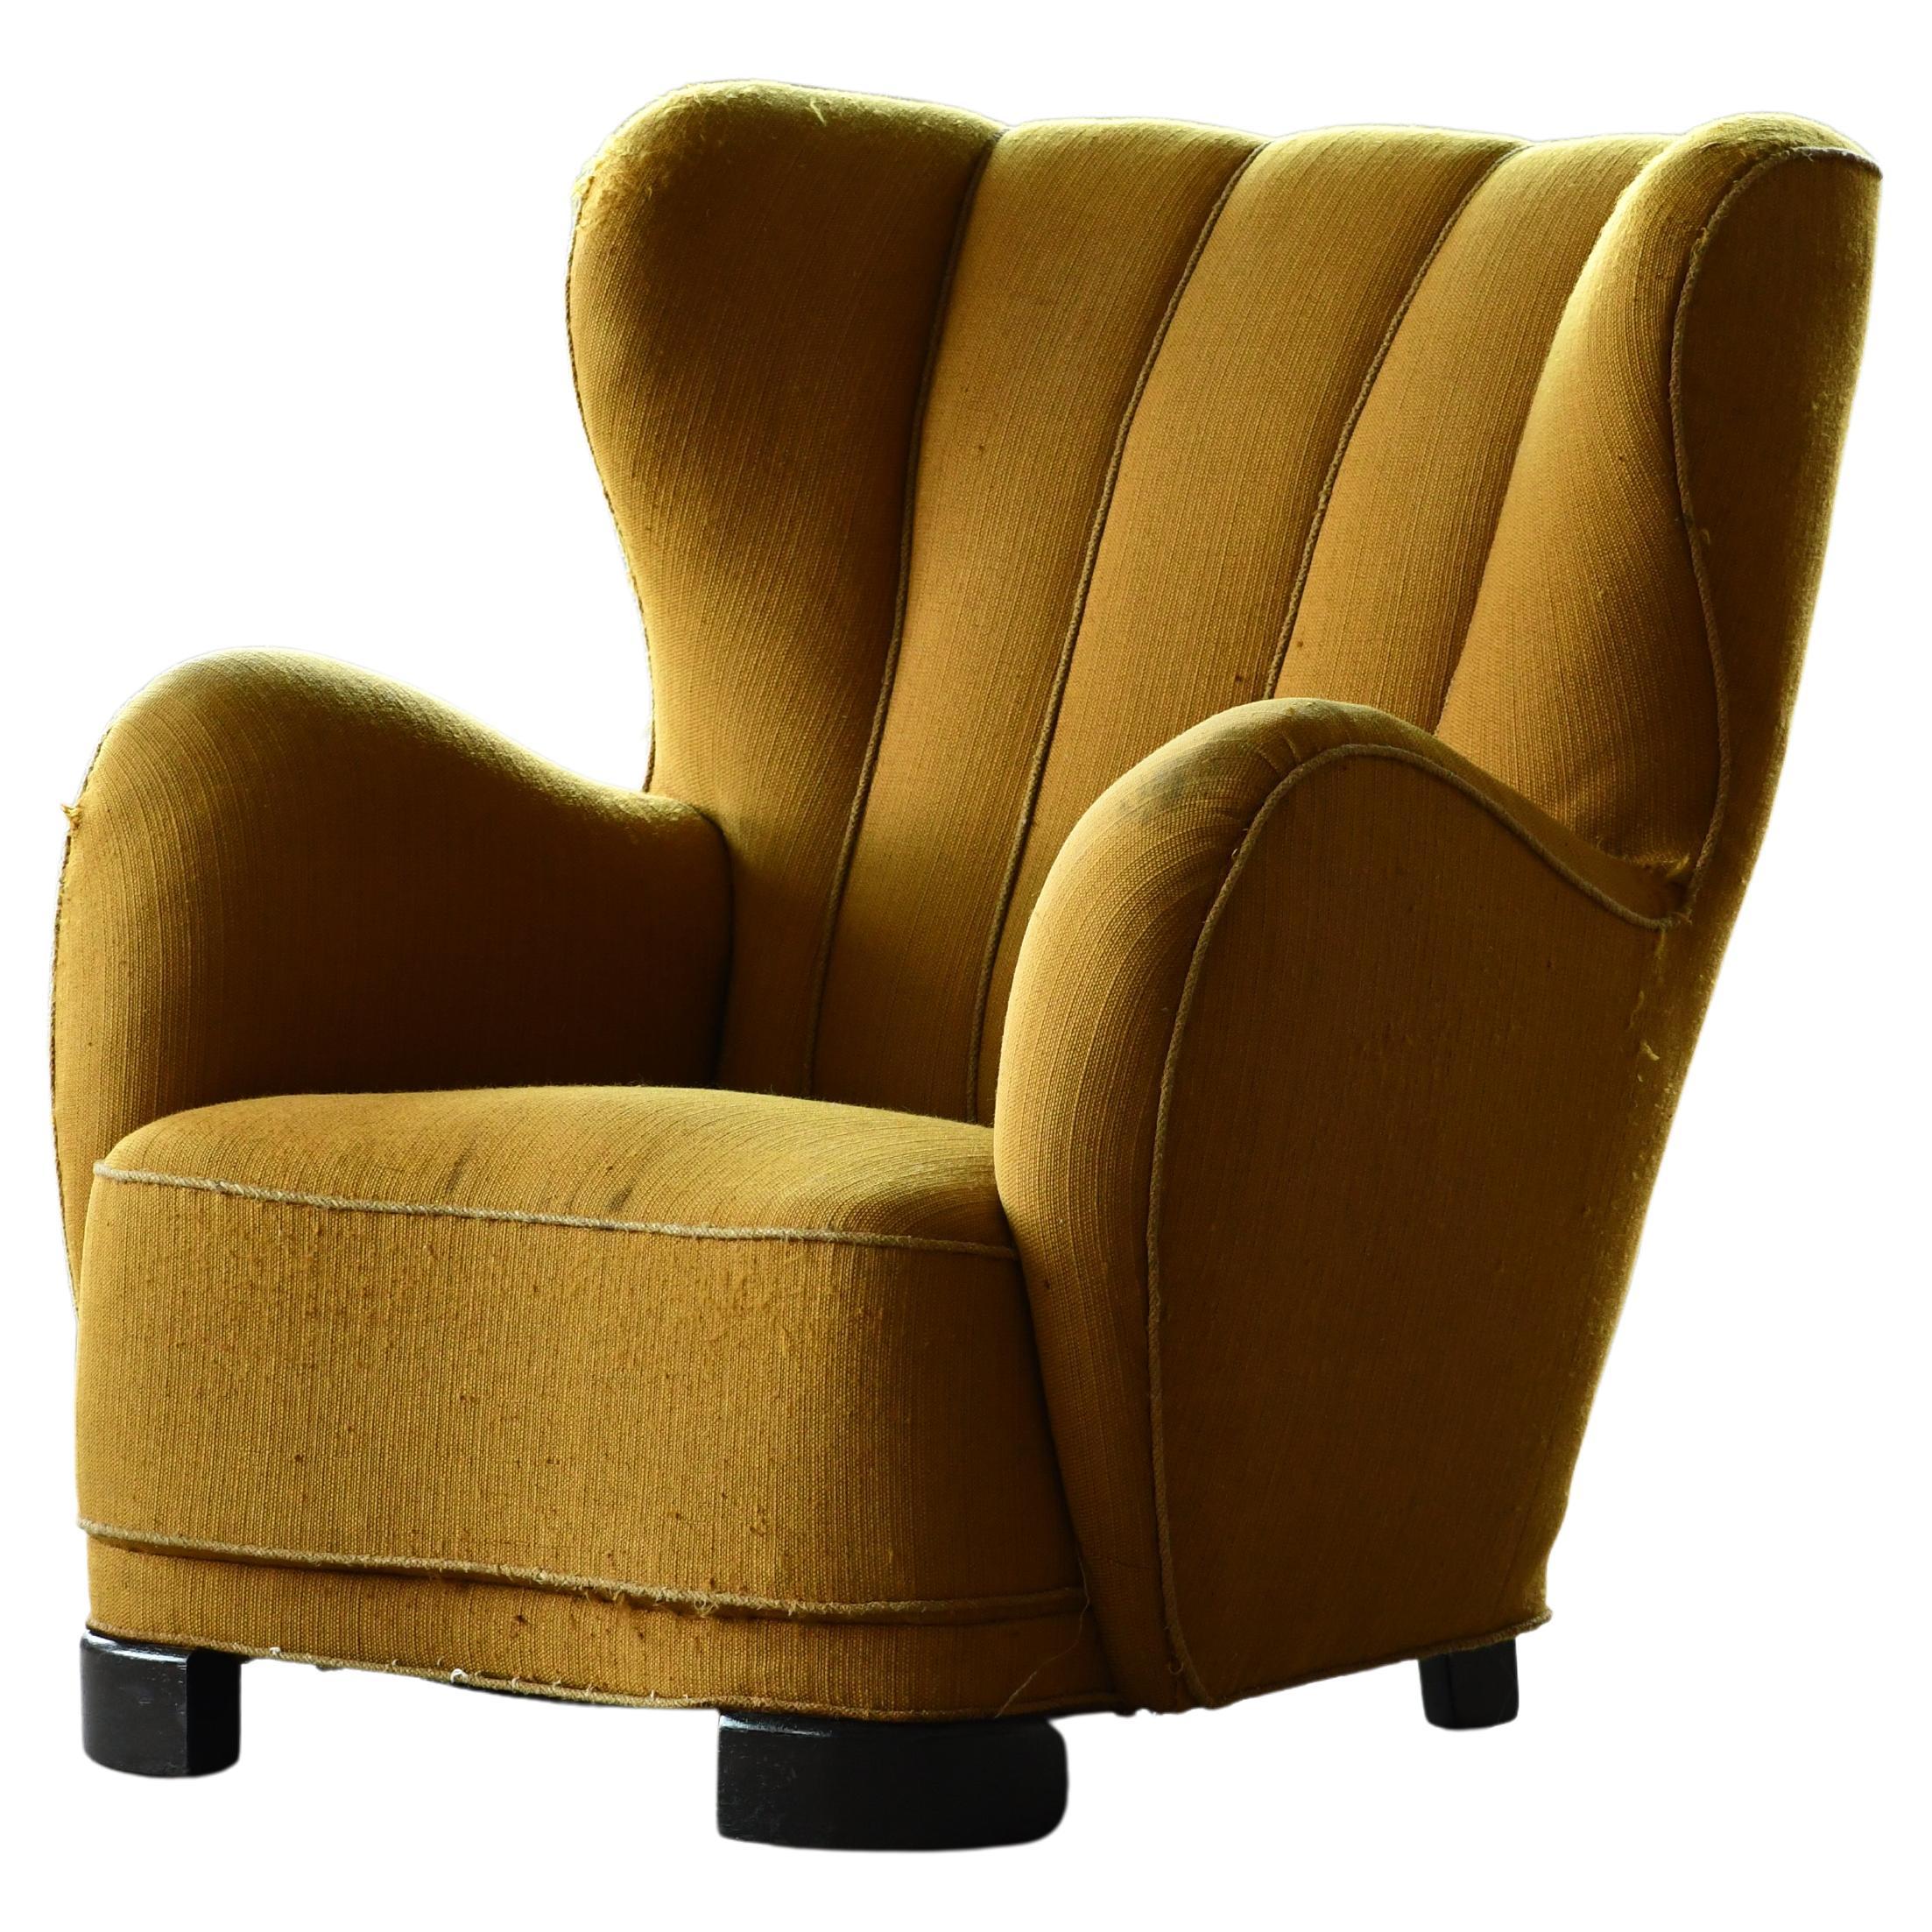 Mogens Lassen Style Danish 1940s Channel Back Lounge Chair in Wool Fabric For Sale